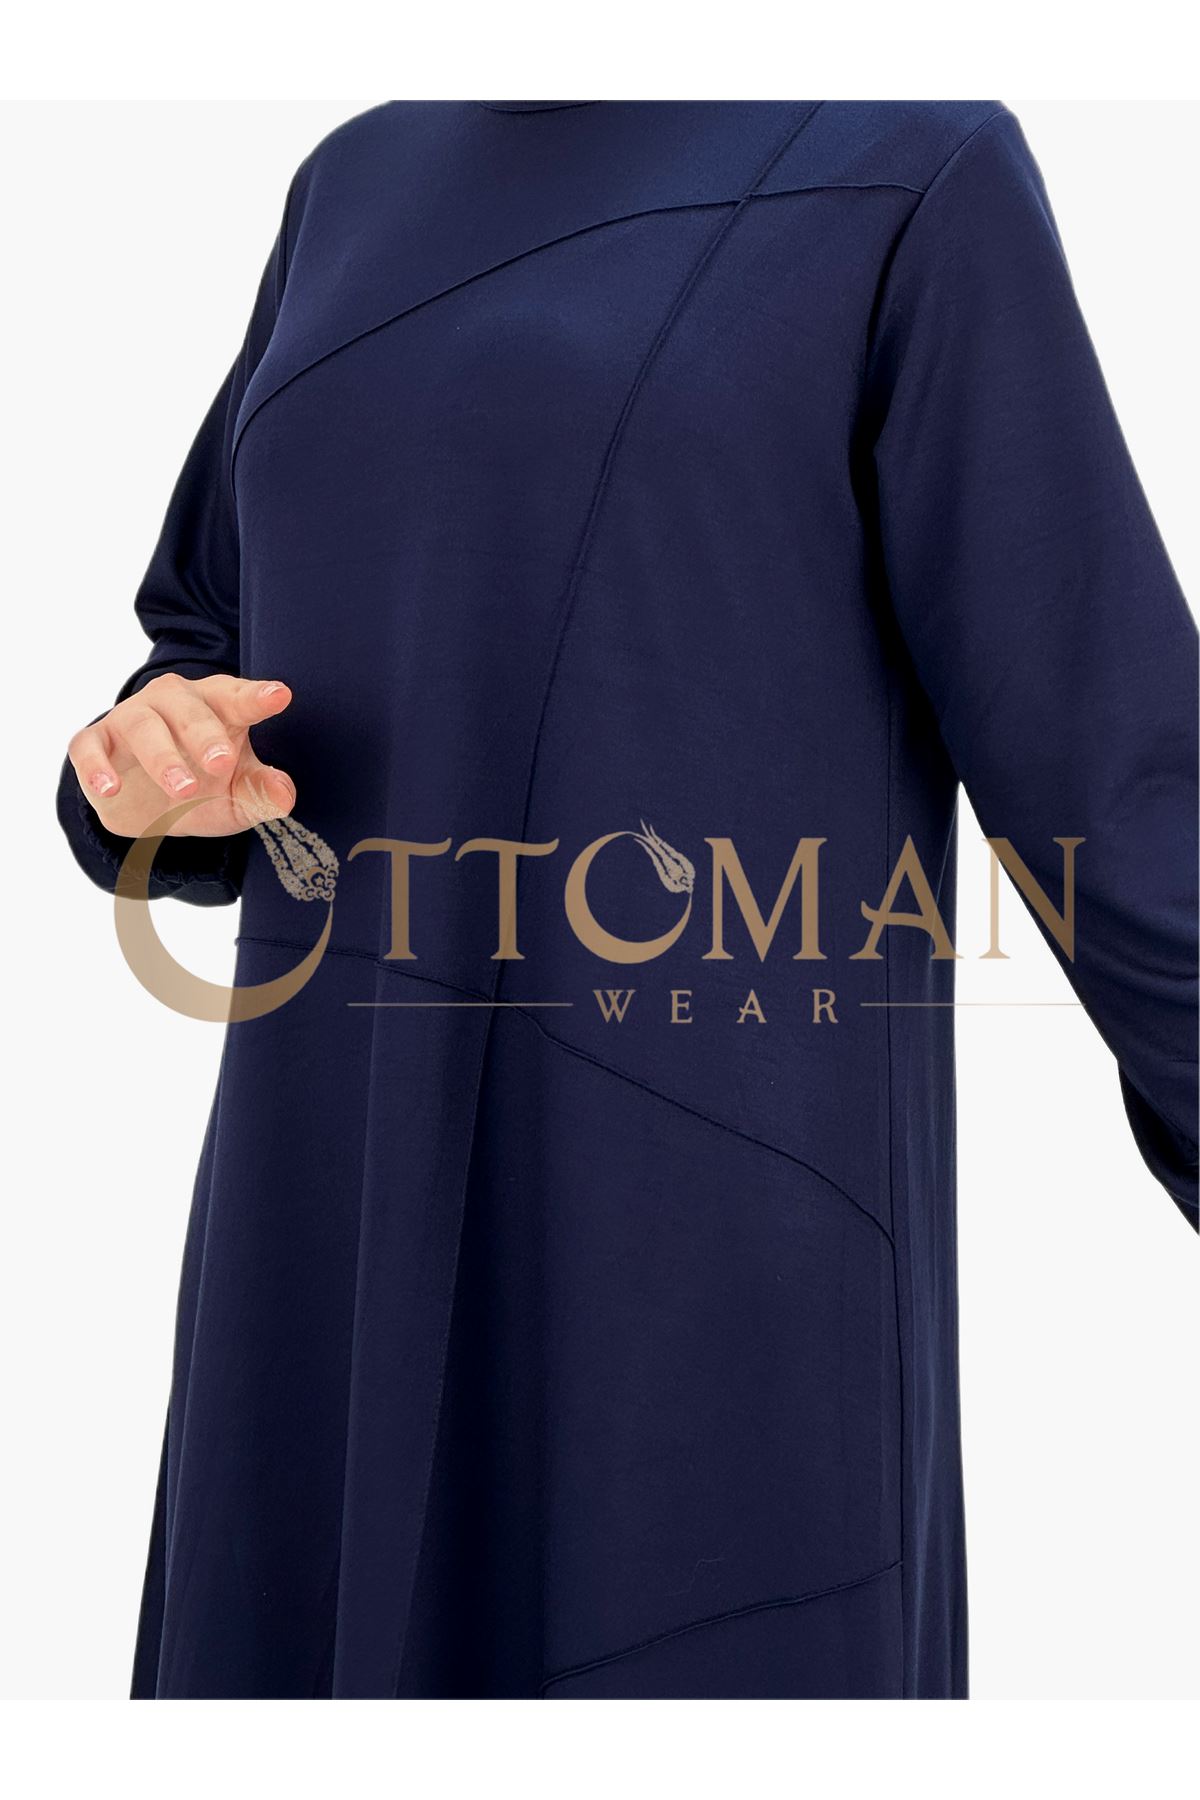 OTW513 İki İplik Elbise Lacivert